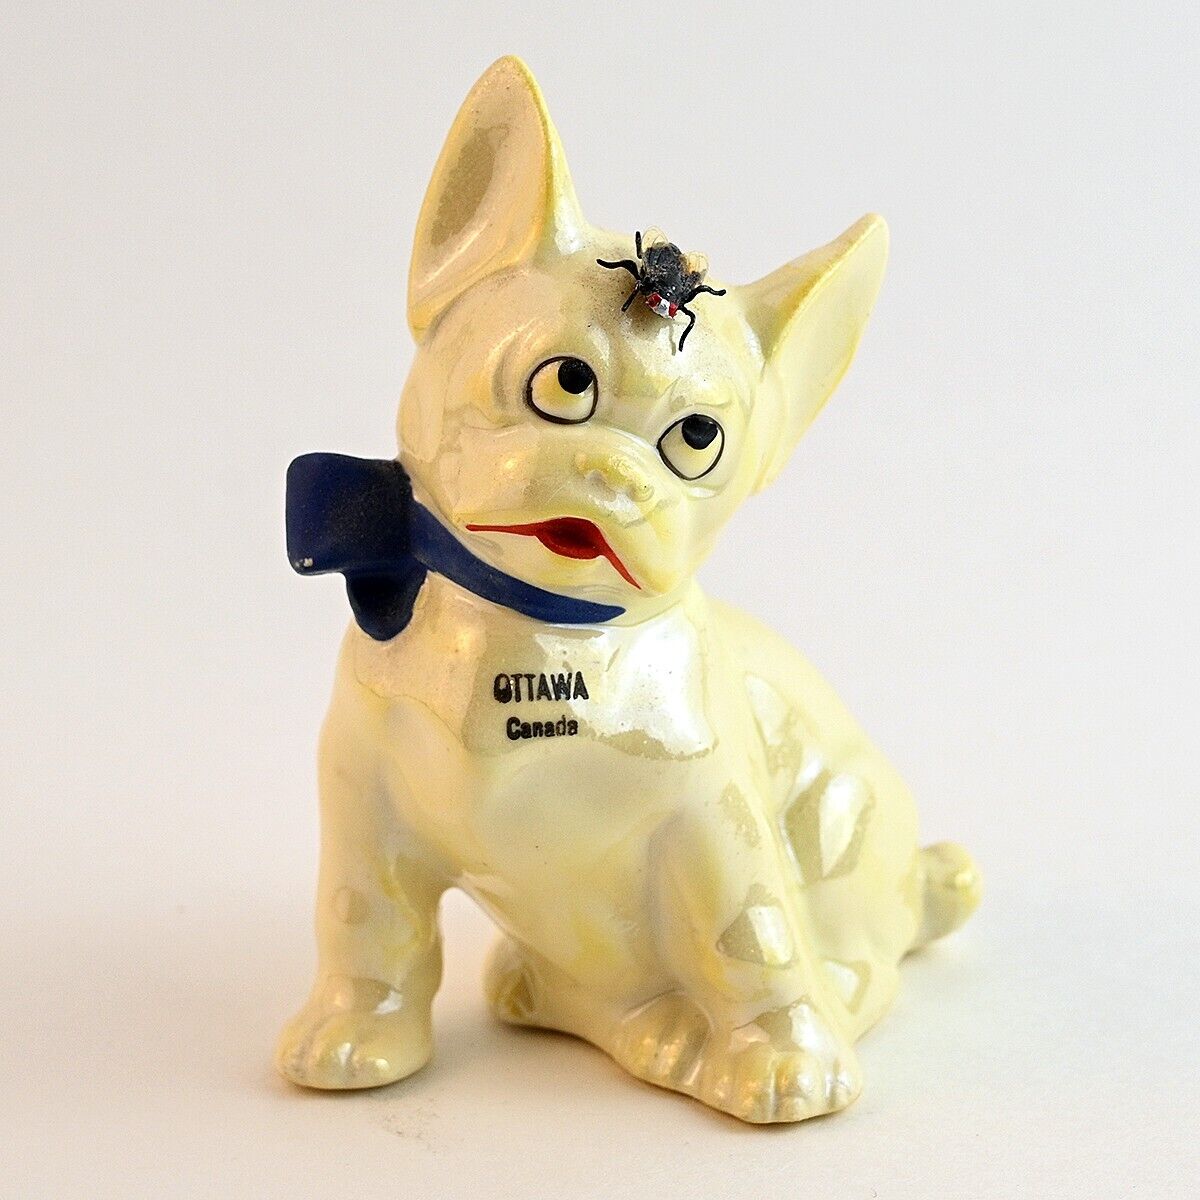 Vintage Luster Dog with Realistic Fly on Head Figurine Souvenir Ottawa Canada